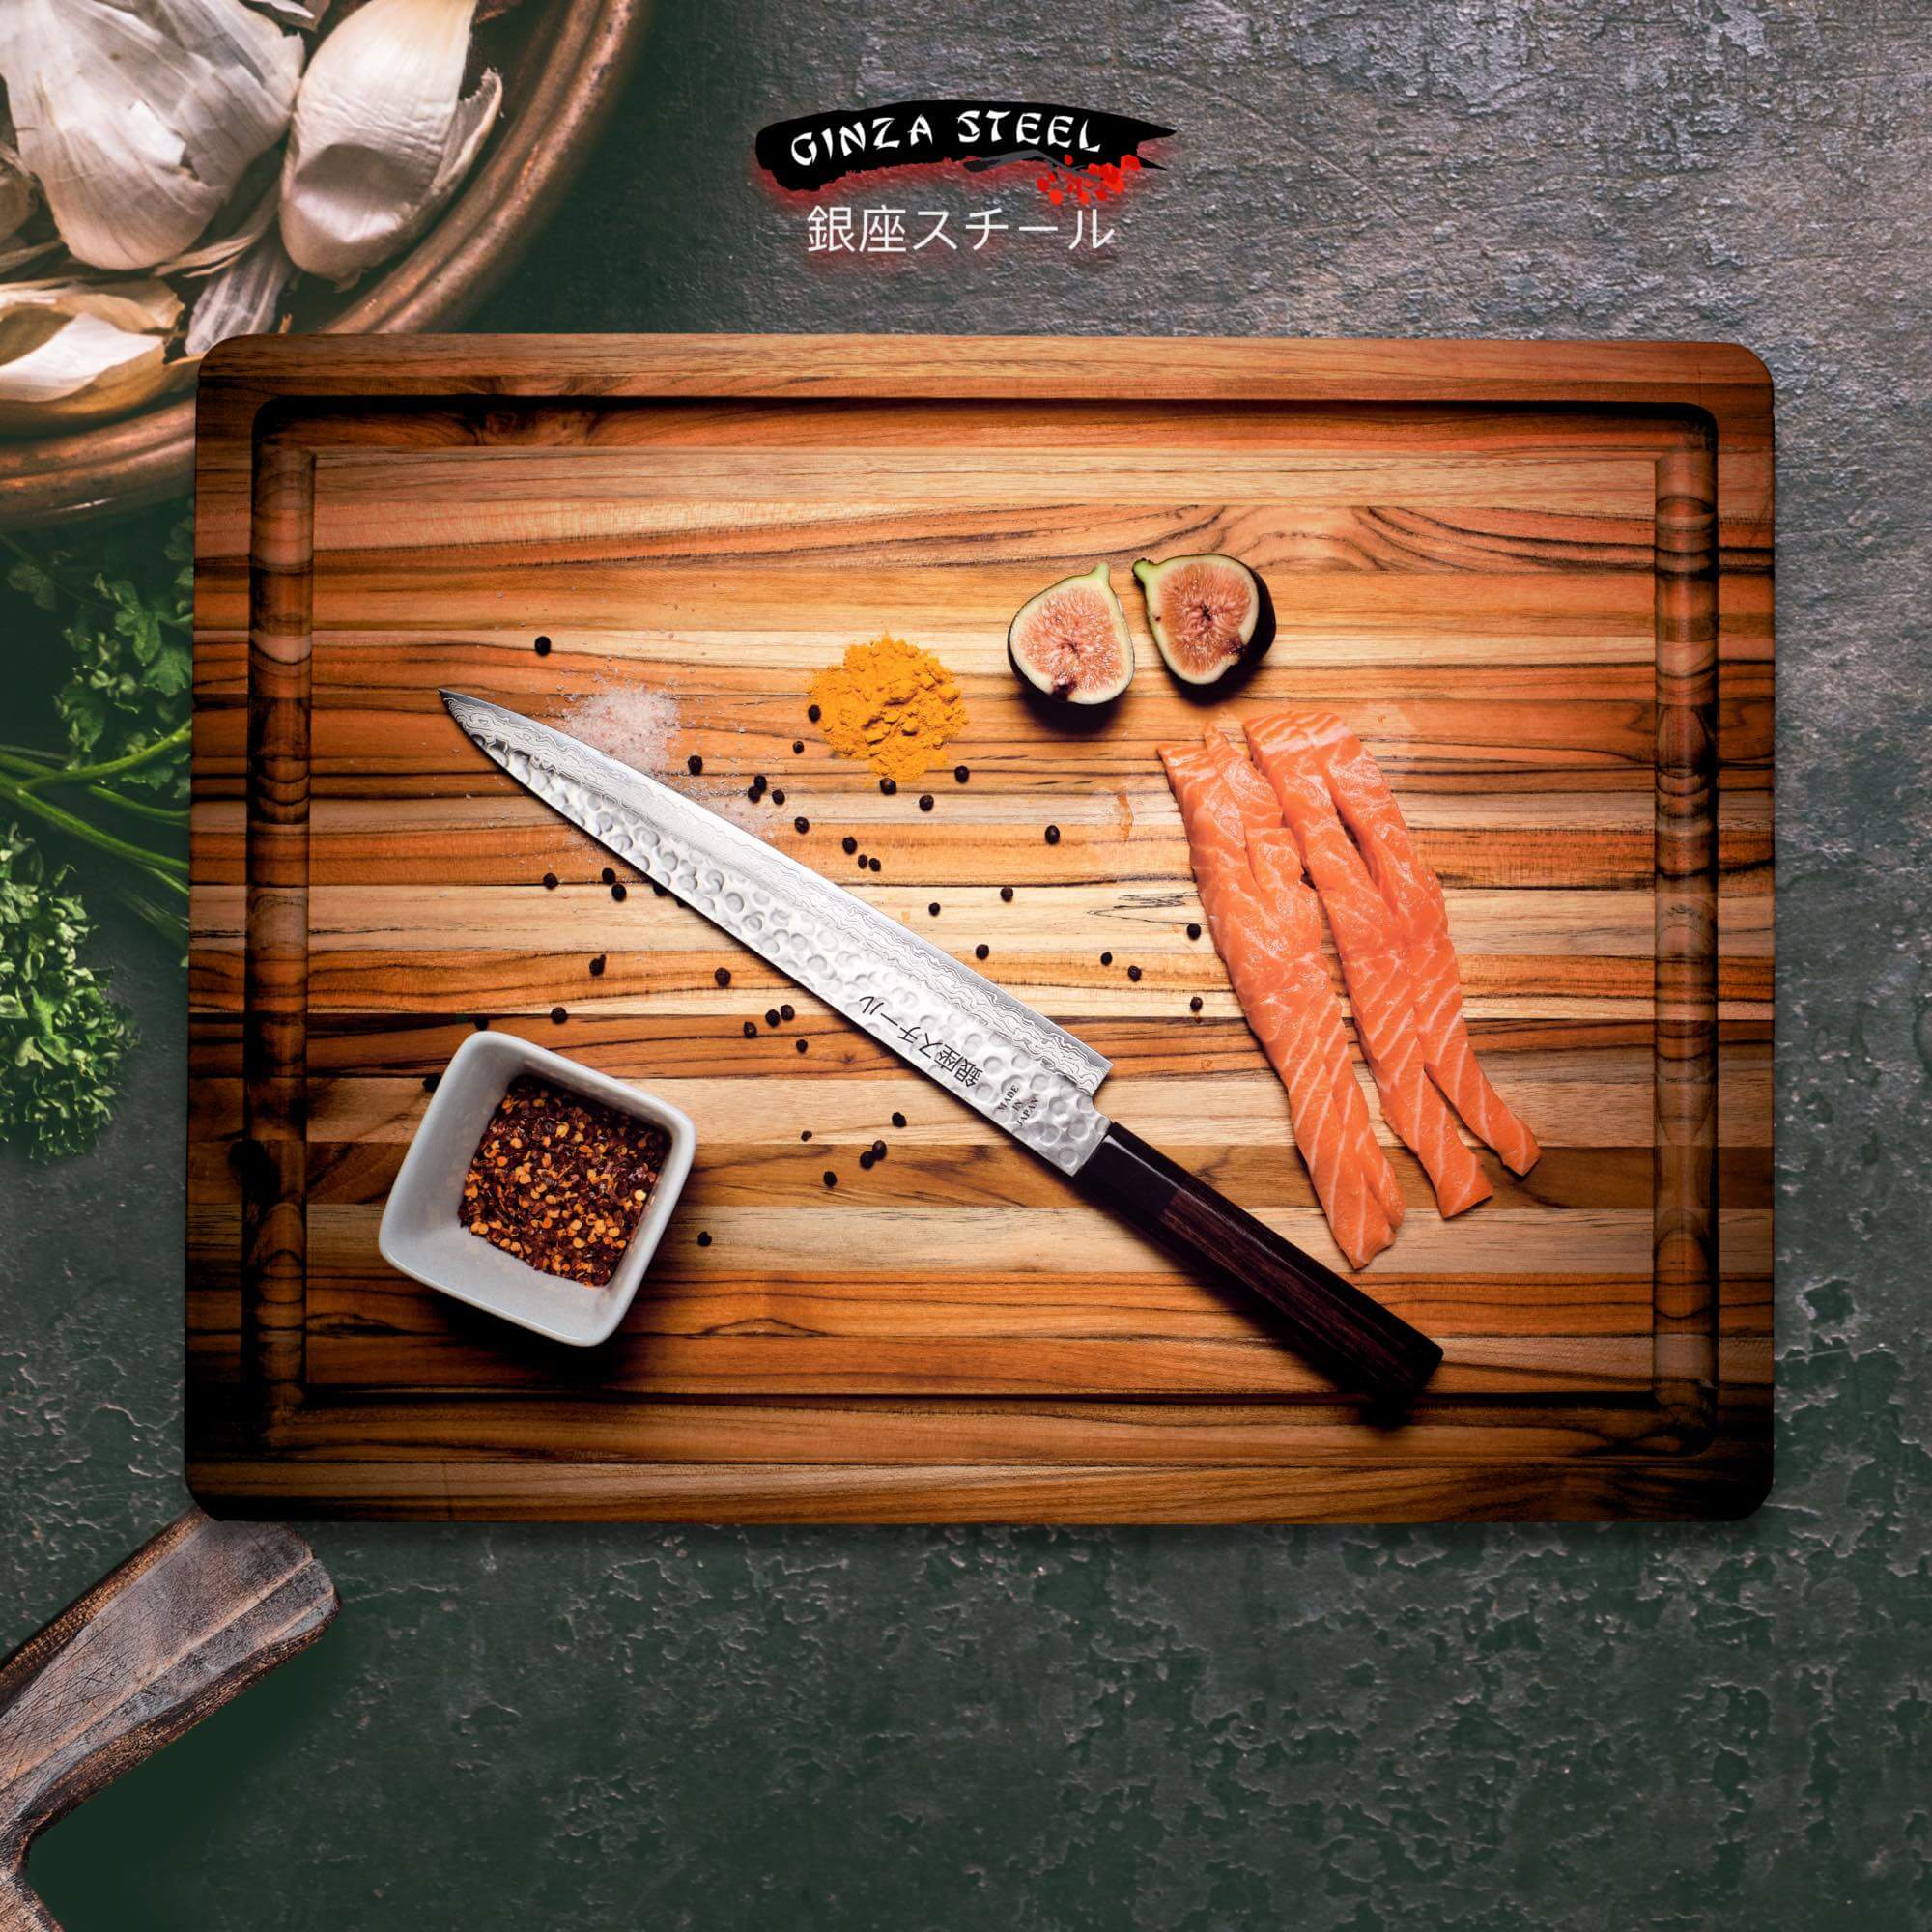 fish slicer knife , Japanese slicer knife, Japanese sujihiki knife